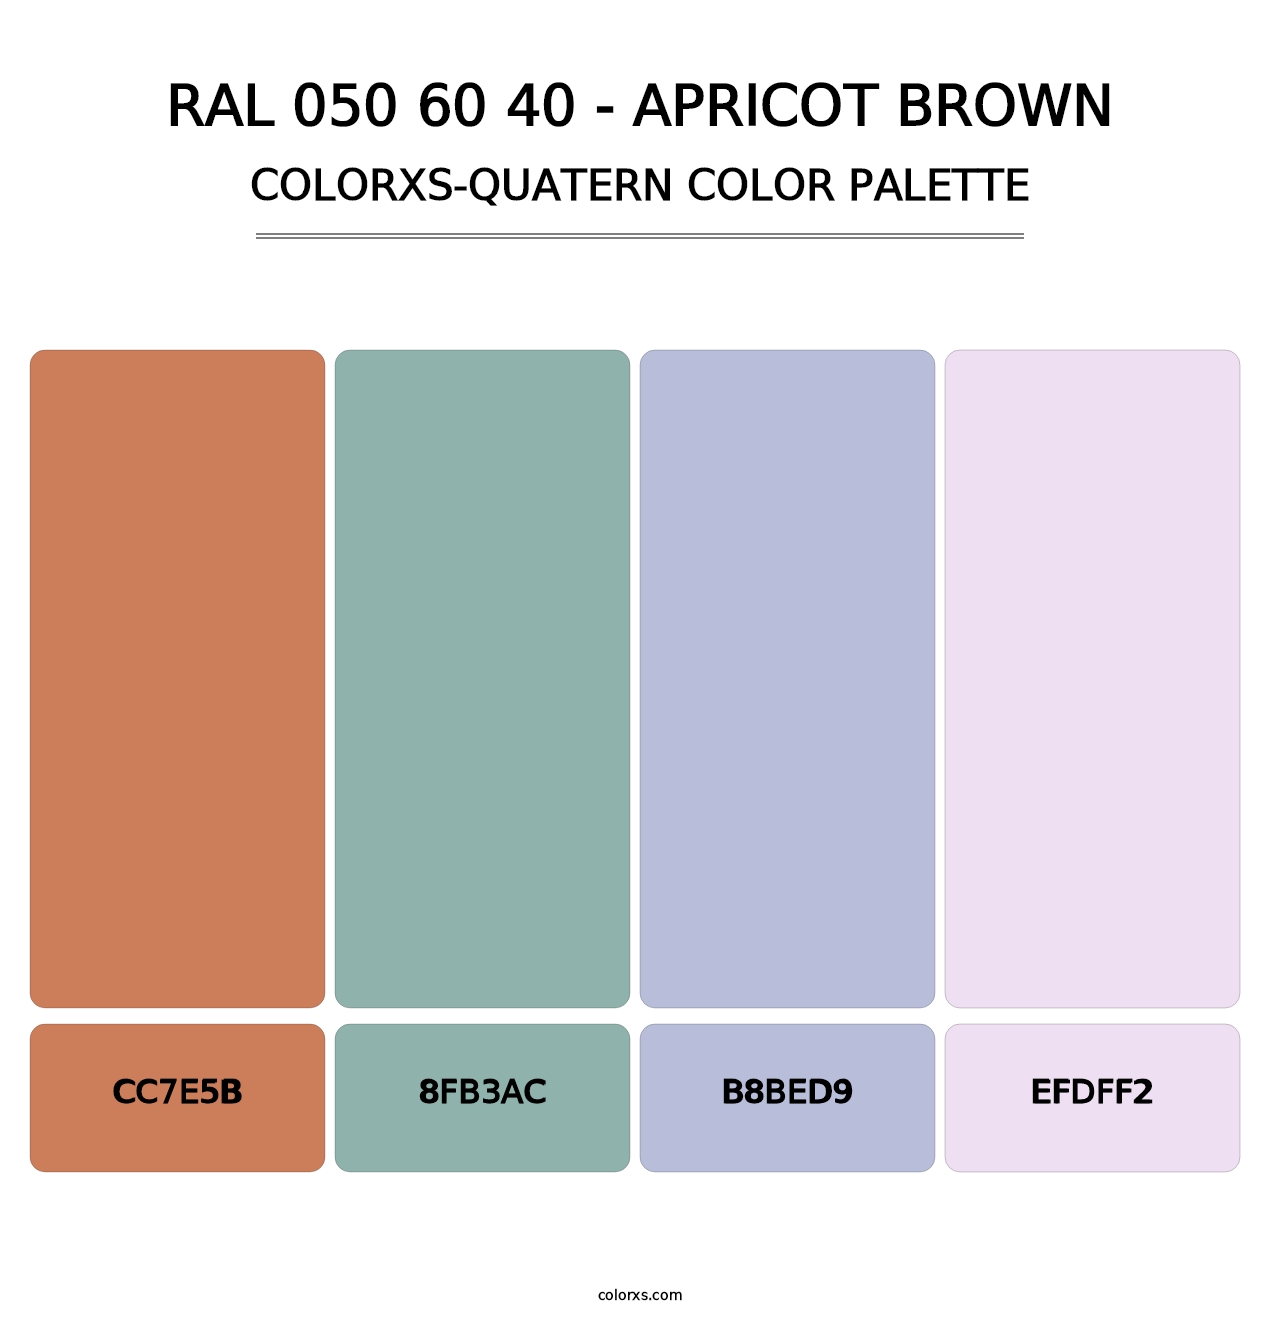 RAL 050 60 40 - Apricot Brown - Colorxs Quatern Palette